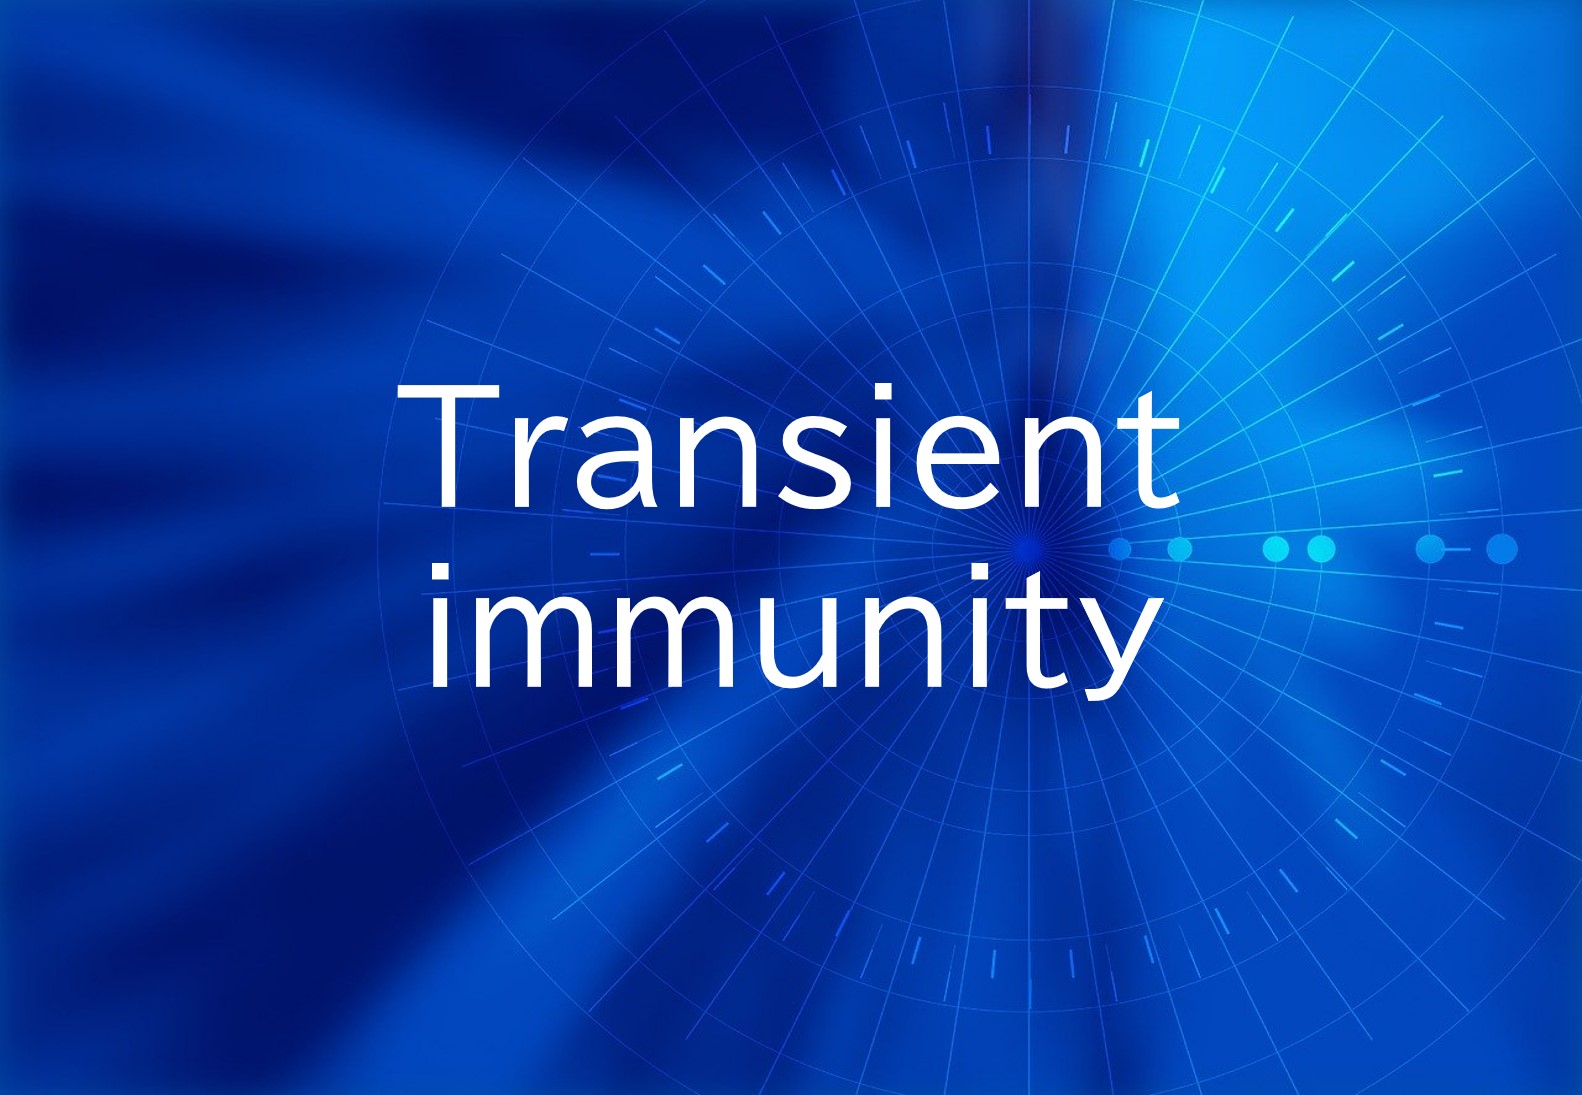 Transient immunity